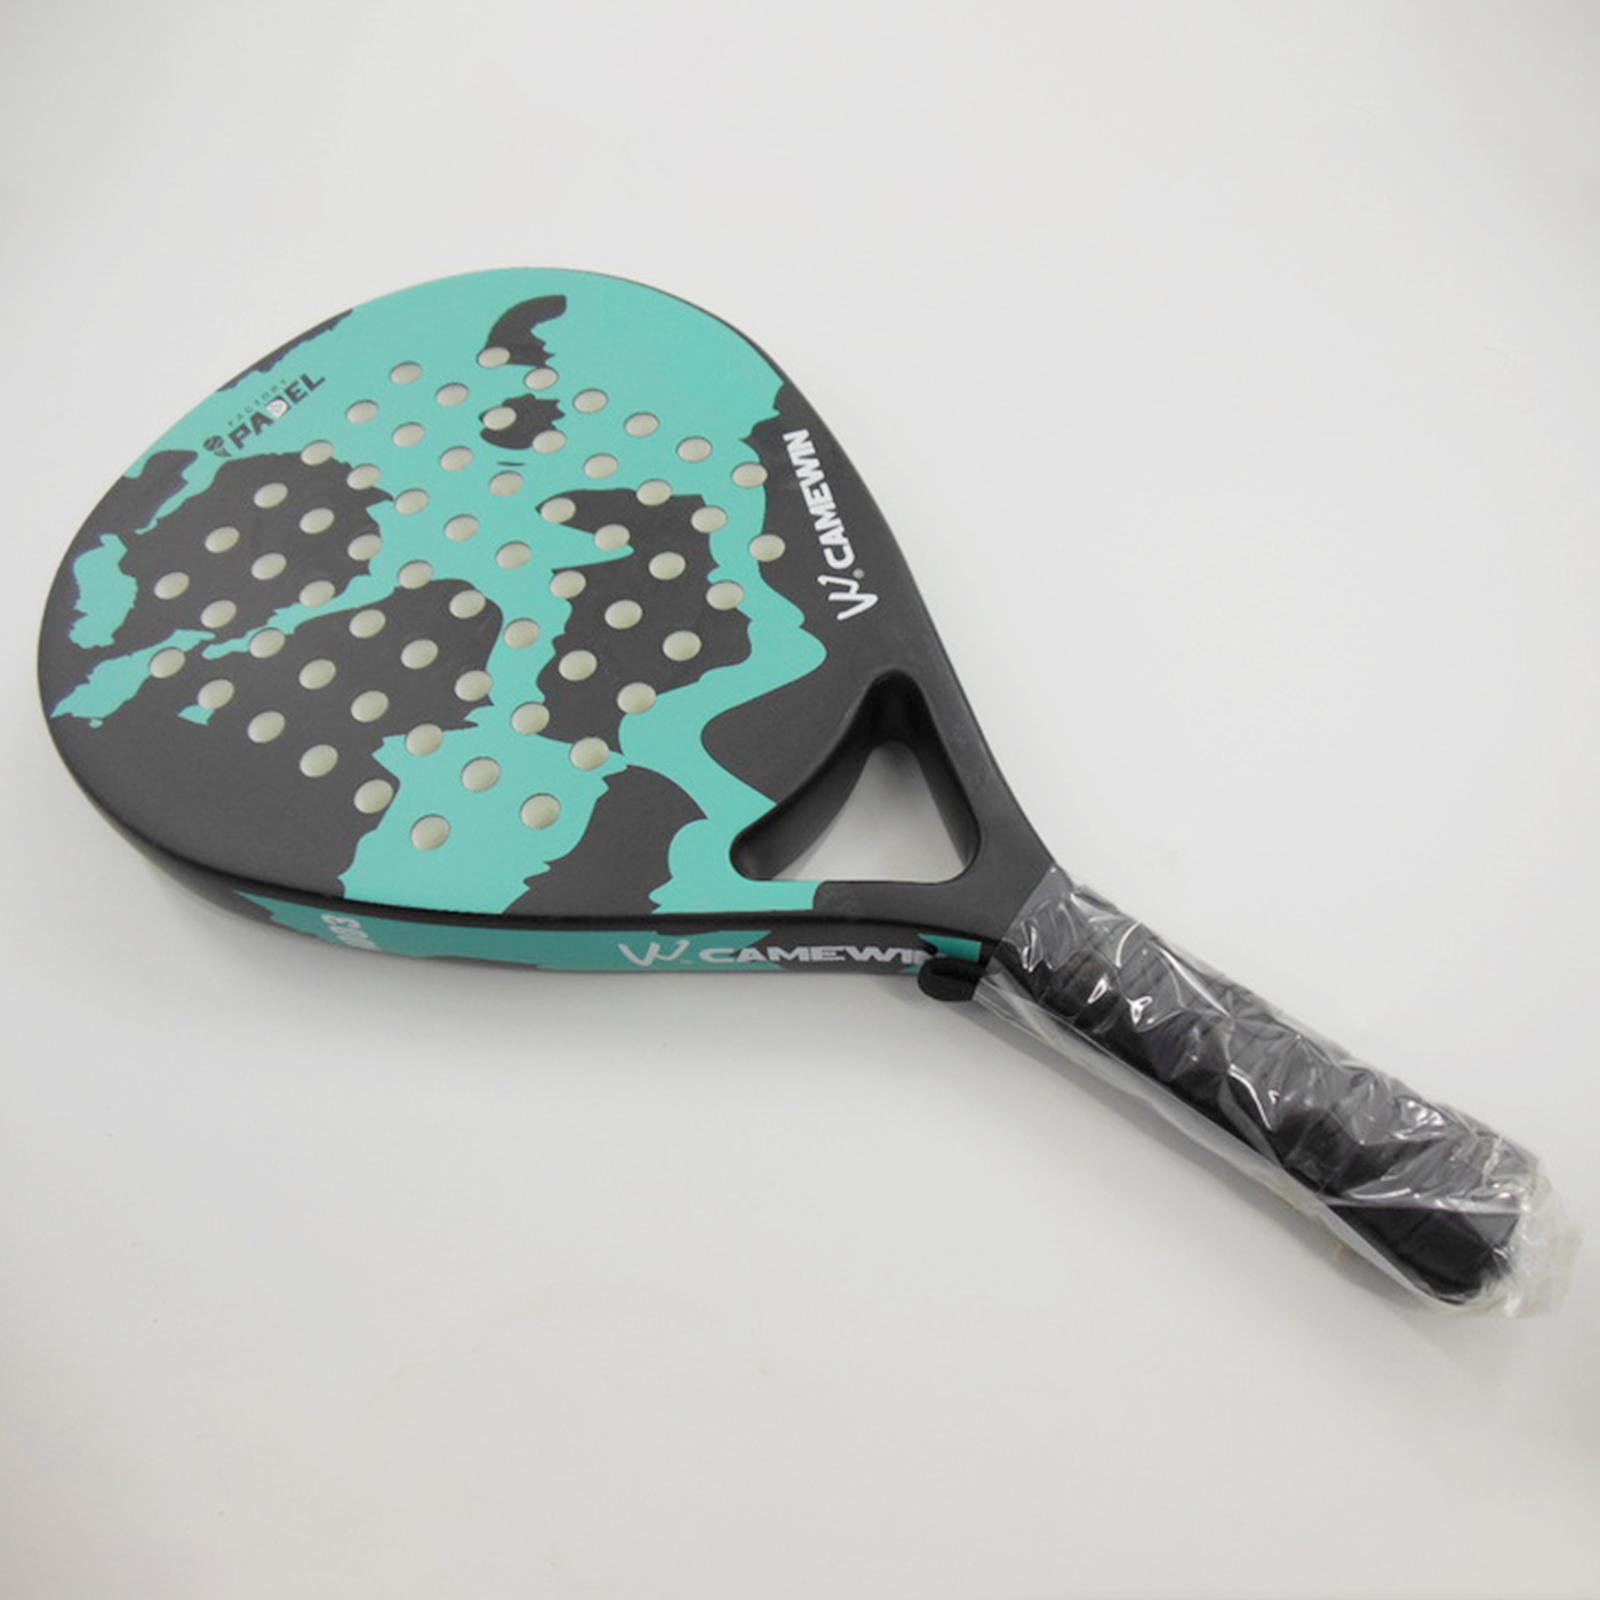 Pro Paddle Tennis Racket Student Beginner Adult Carbon Fiber Grit Face